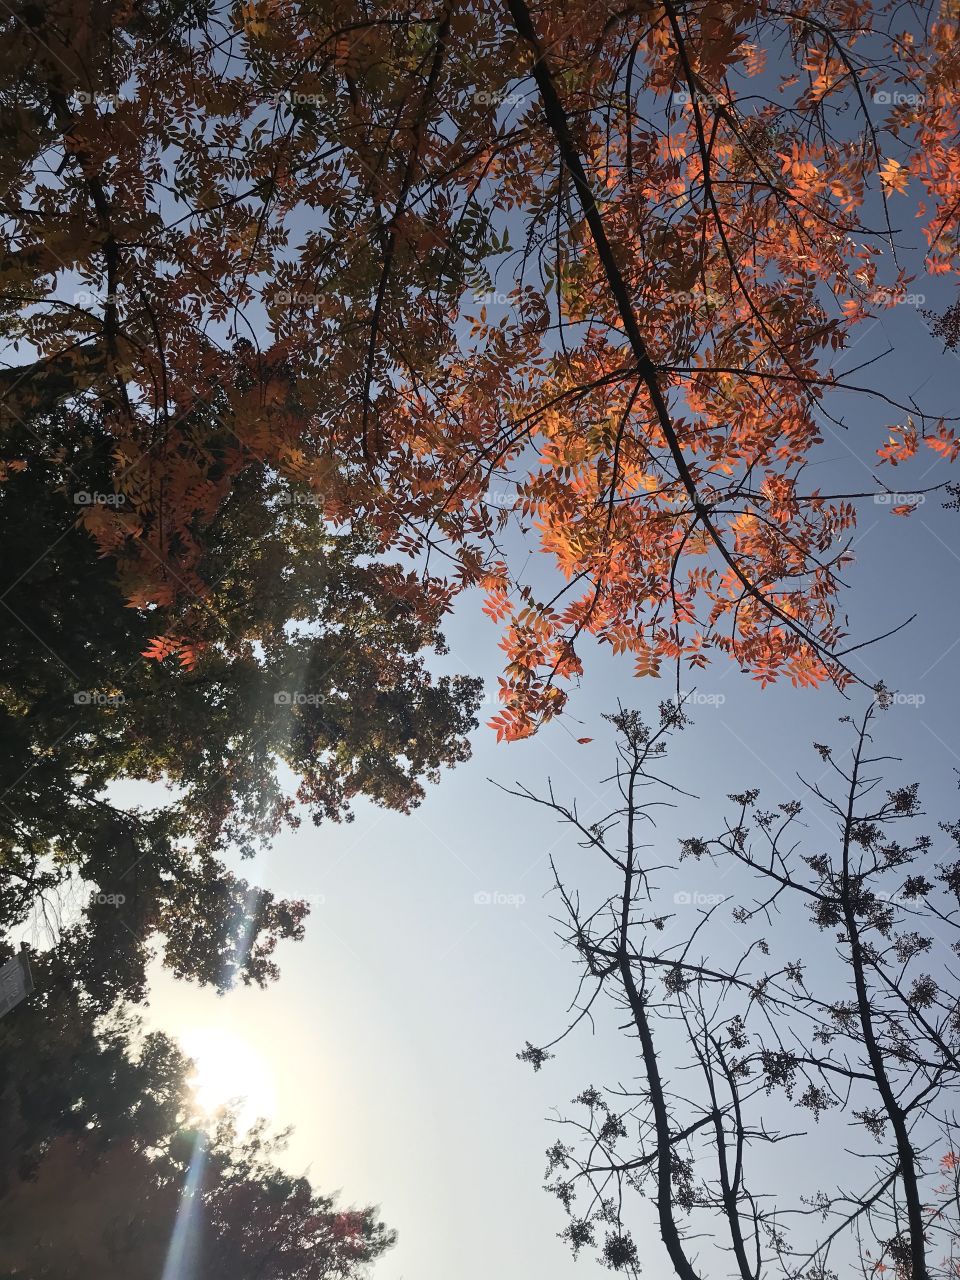 Sky with leaf